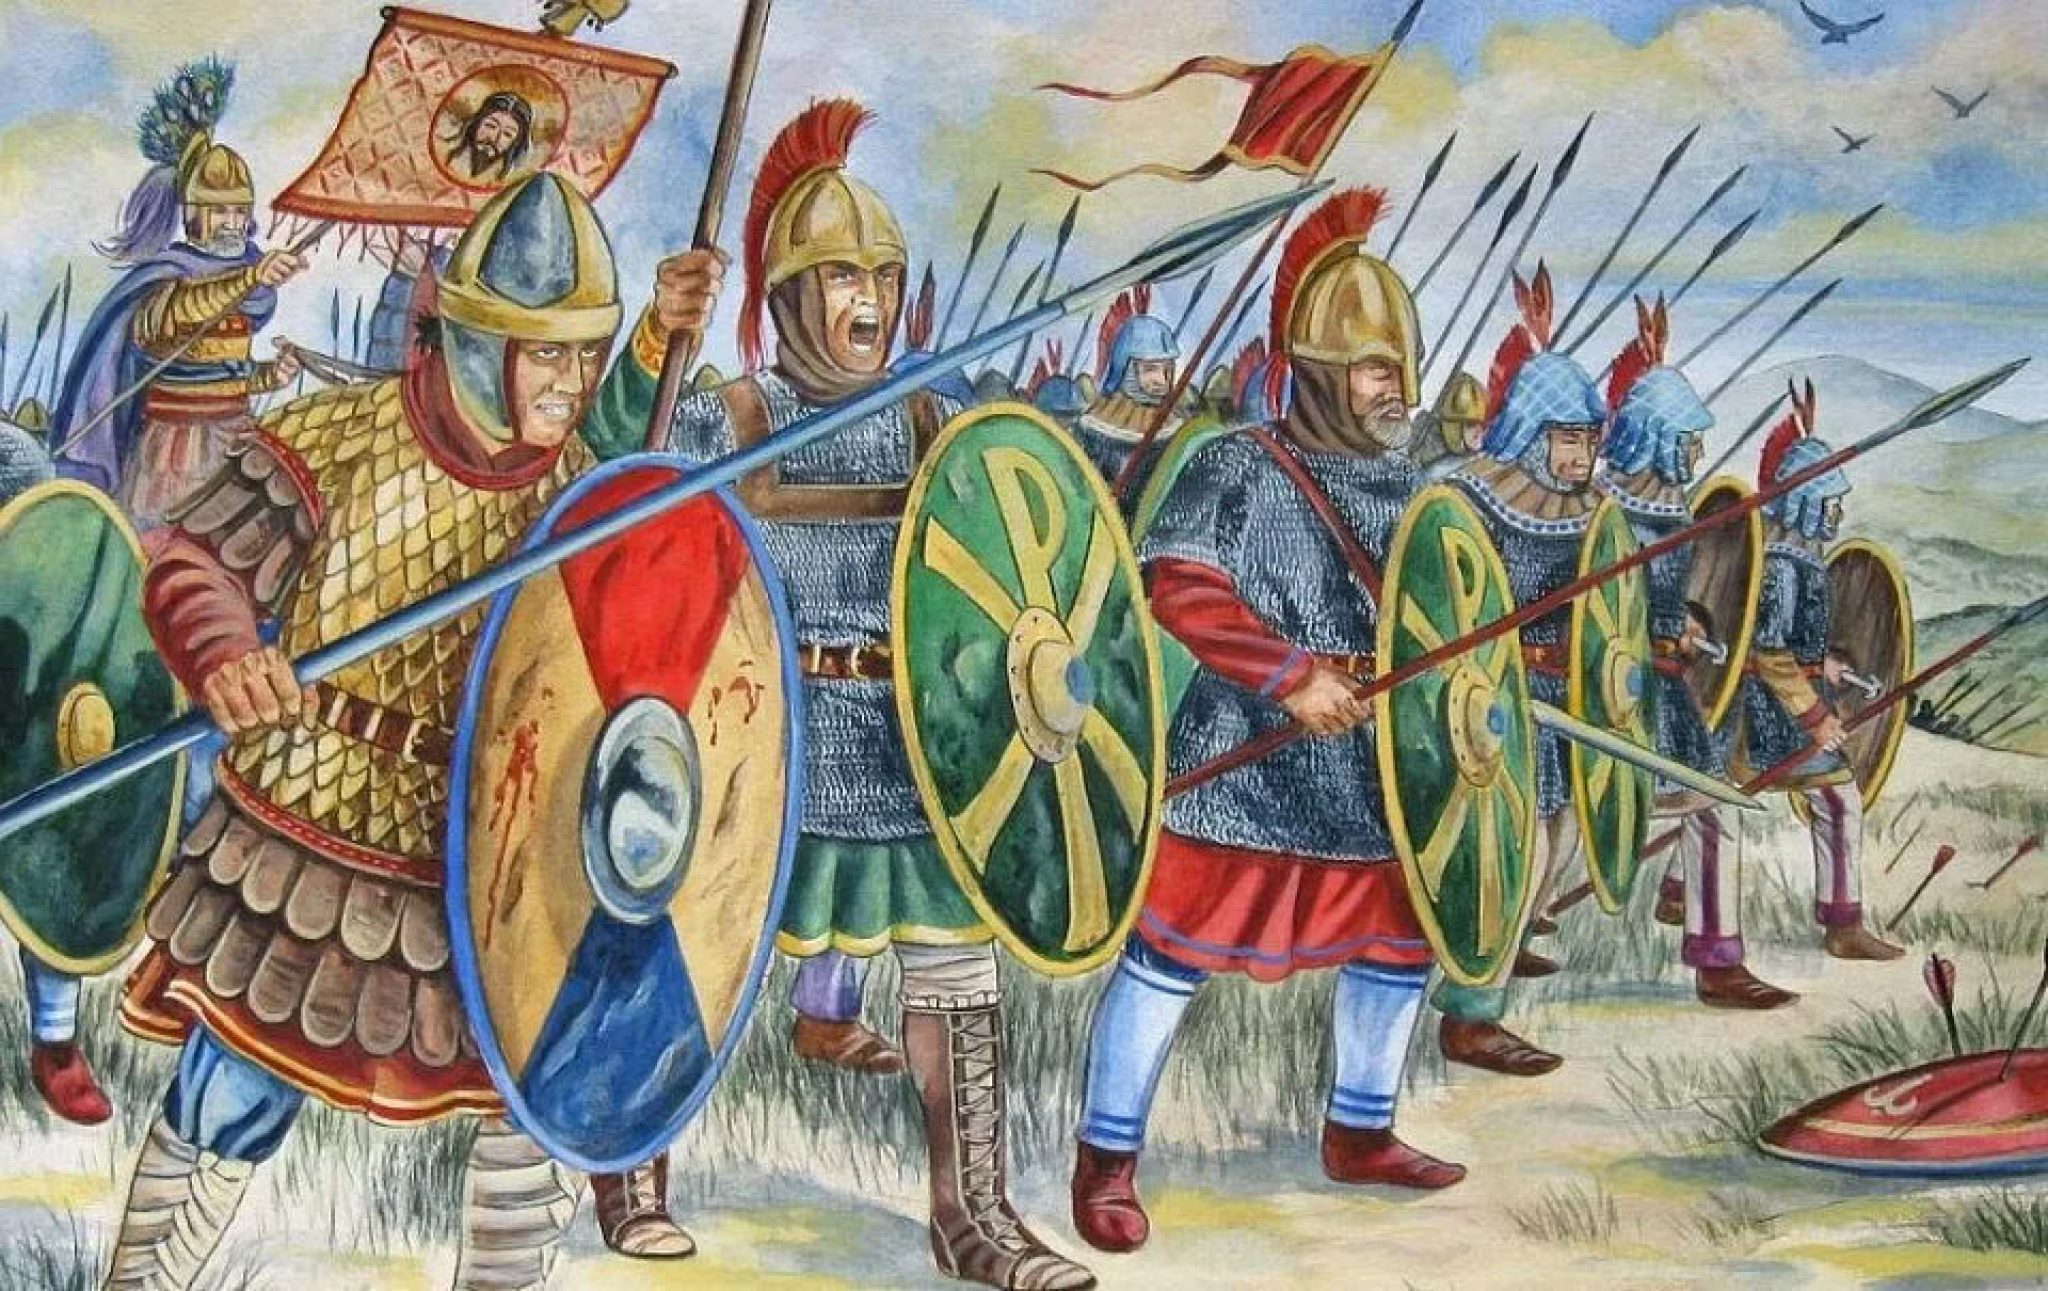 Vi vii век. Византия пехота 10 век. Византийский воин 7 век. Армия Византии 7 век. Византийский воин 6 века.